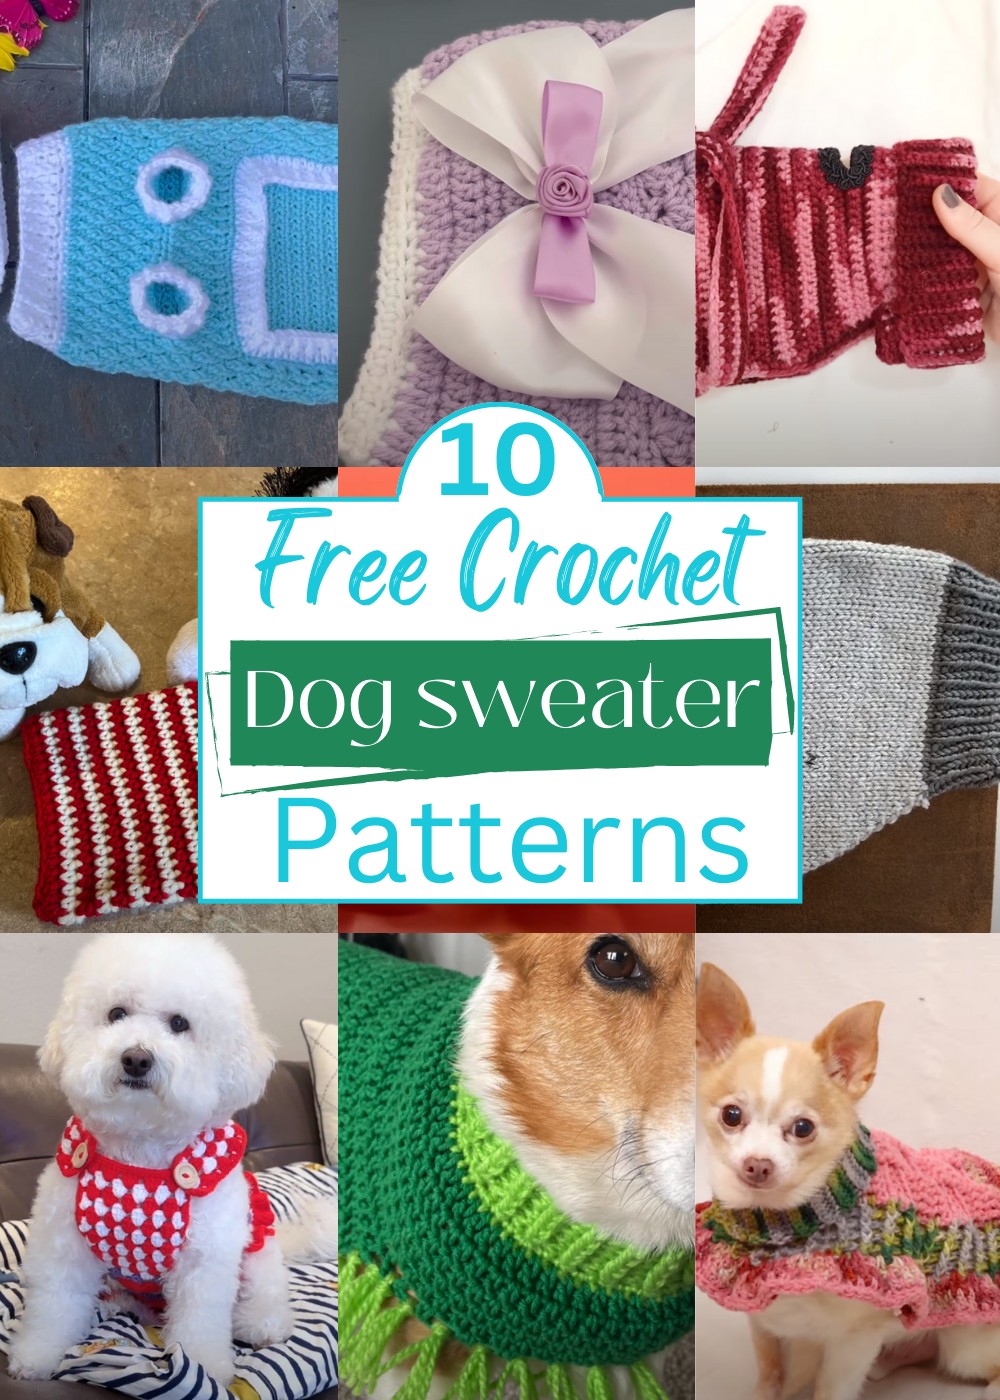 Crochet Dog sweater Patterns